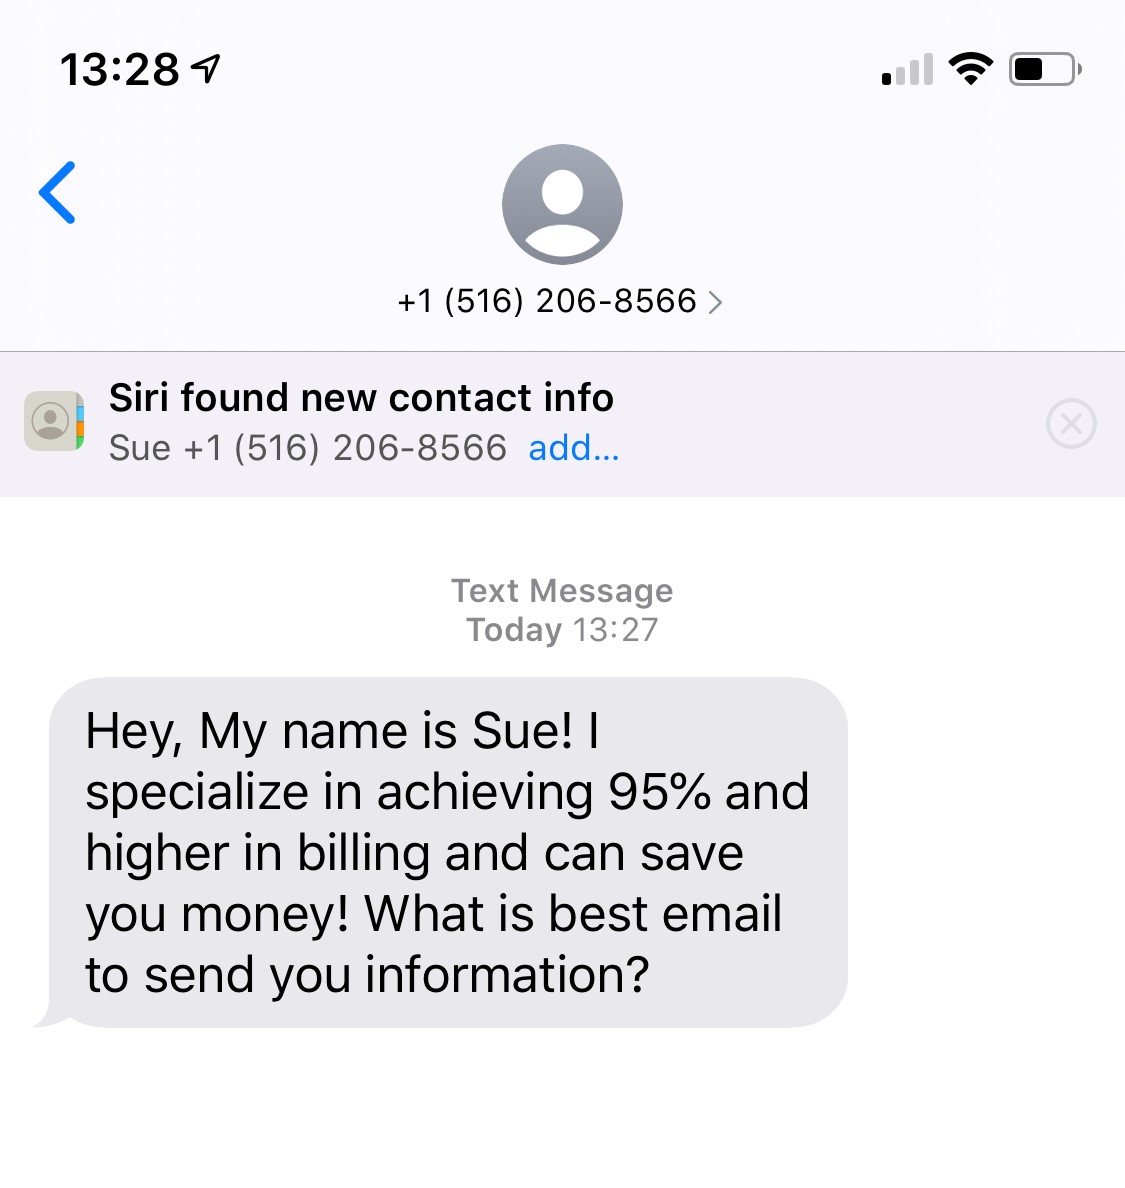 SMS Phishing example